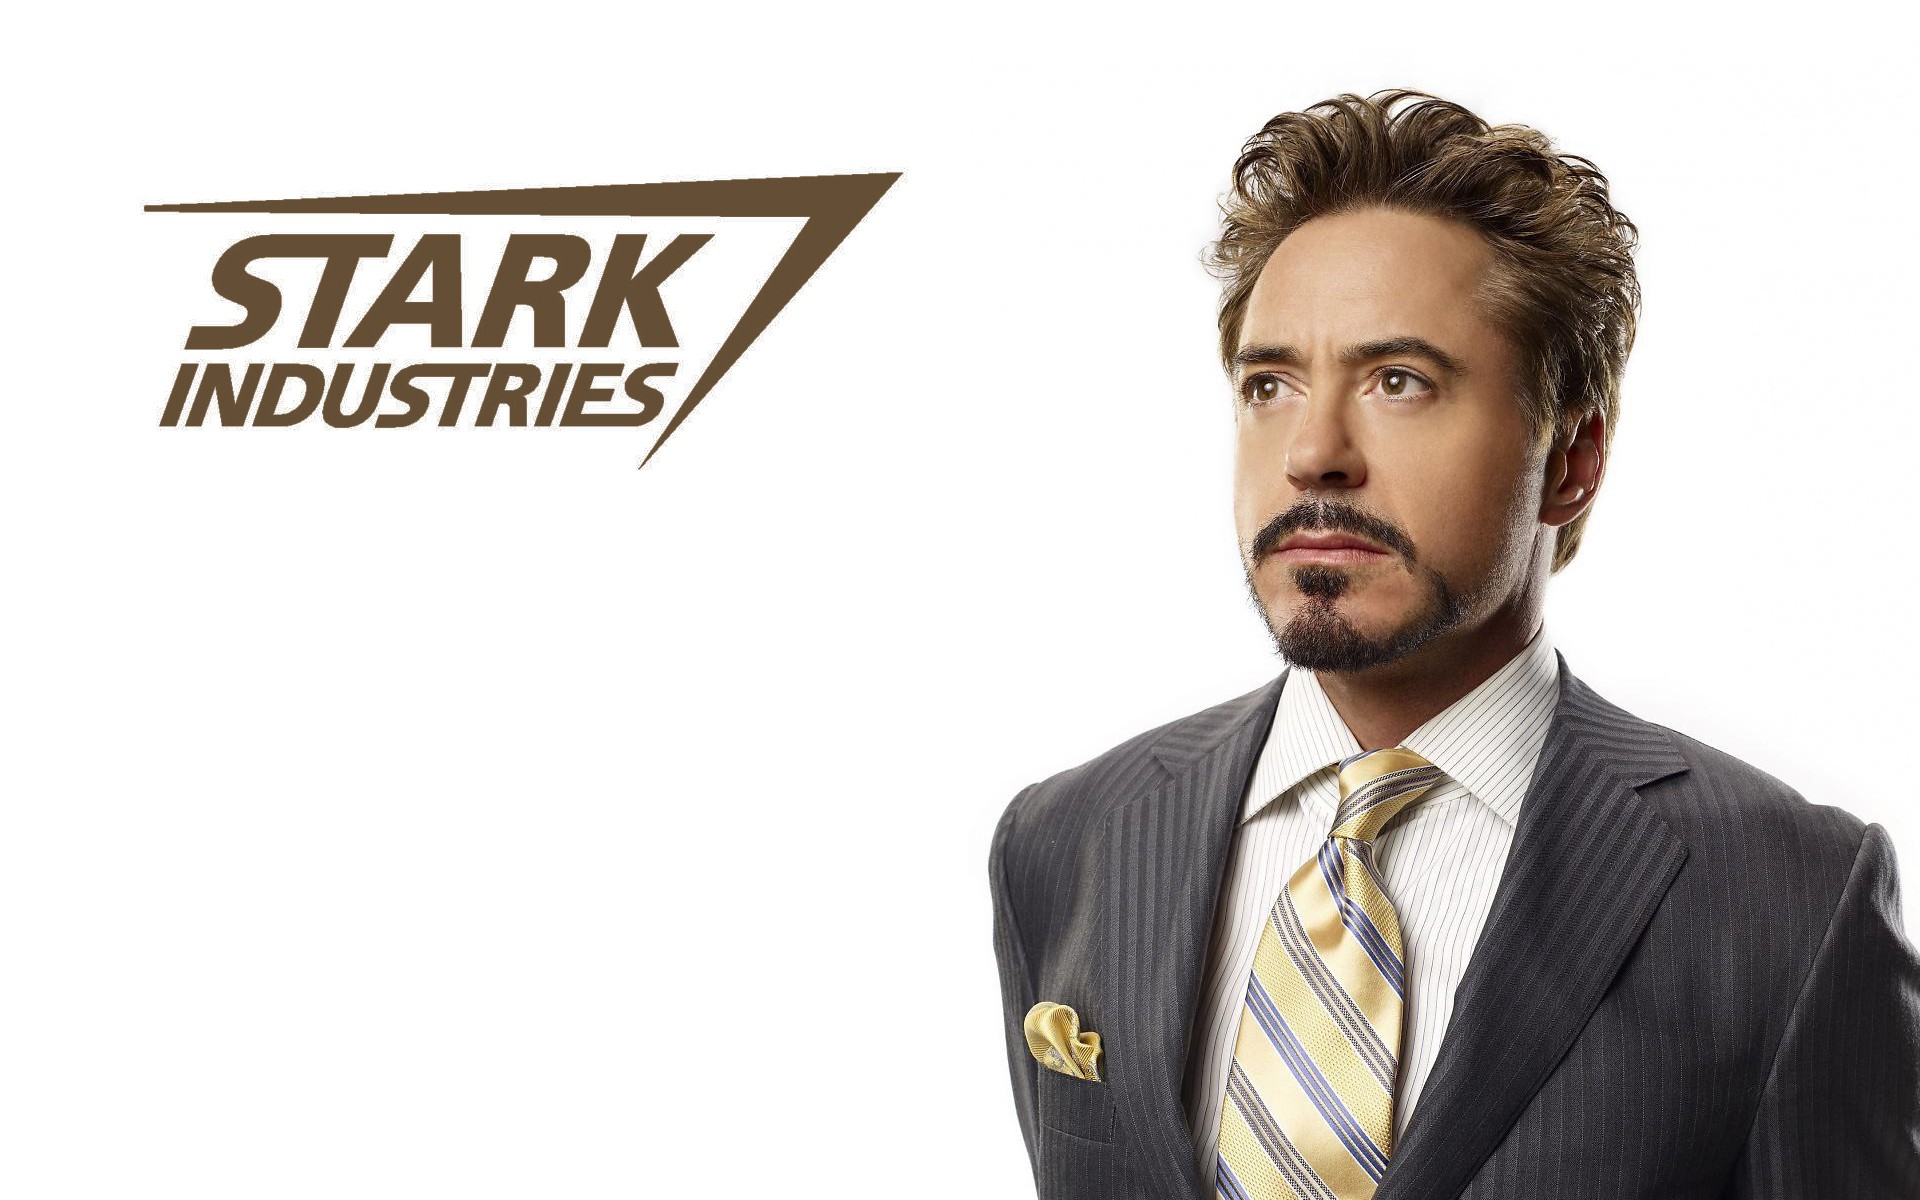 Tony Stark, Iron Man, Robert Downey Jr. Wallpaper